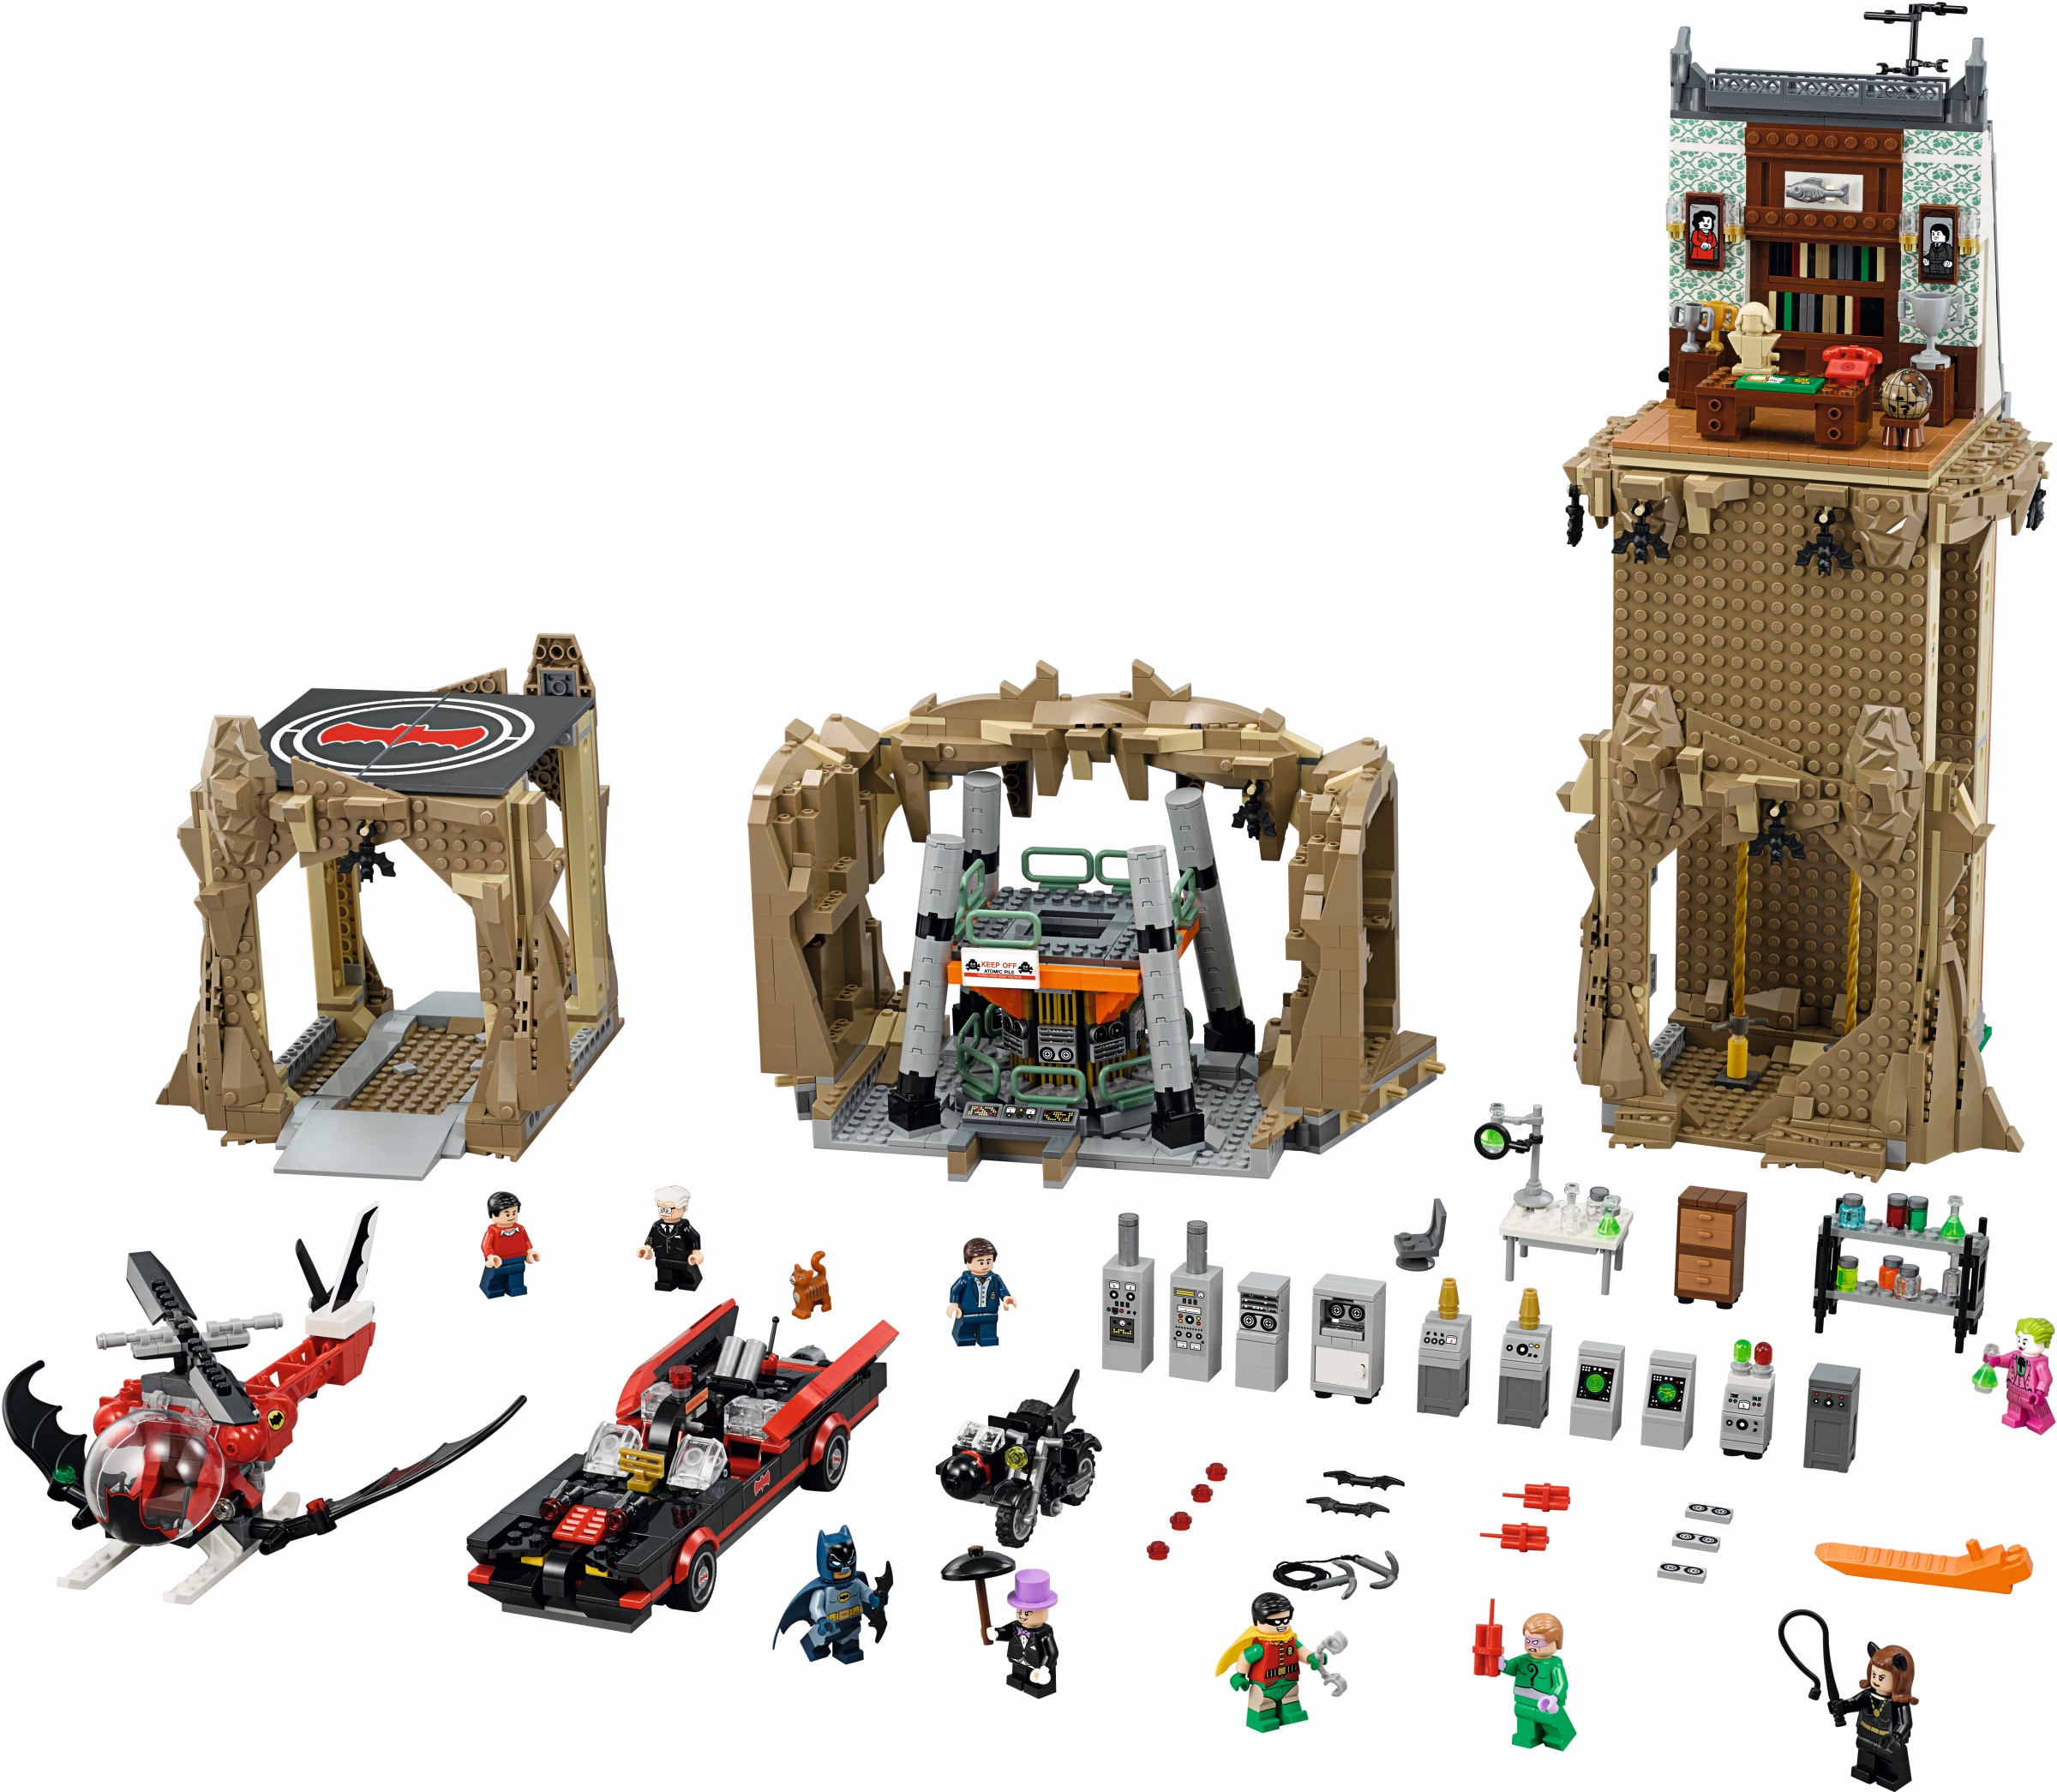 The Batman 2022 LEGO sets: Batcave, Riddler, Catwoman chase